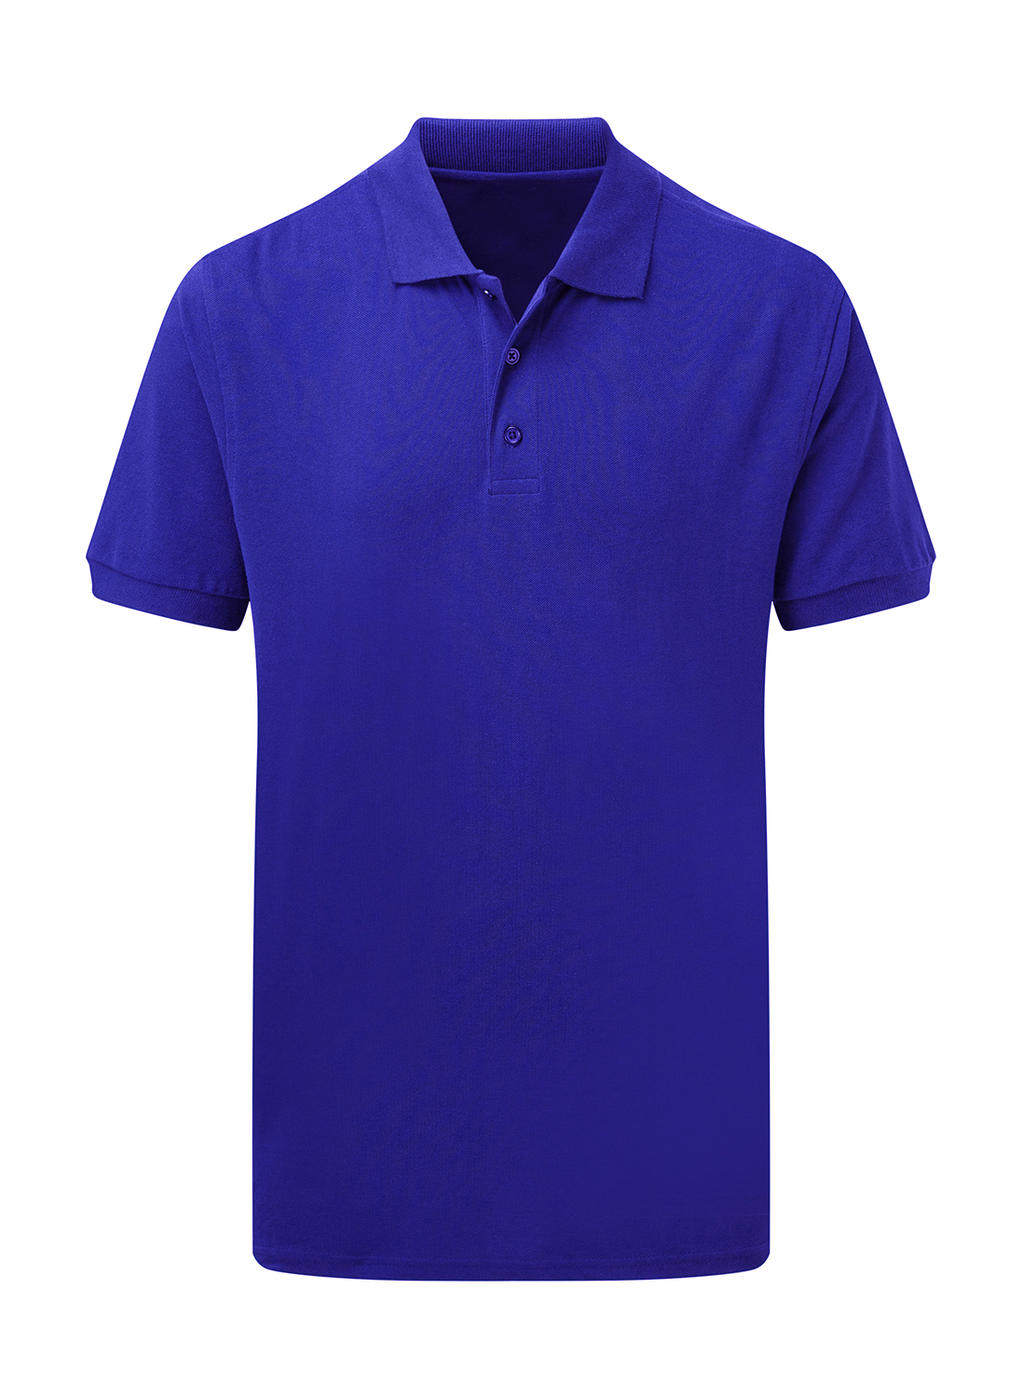  Mens Cotton Polo in Farbe Royal Blue